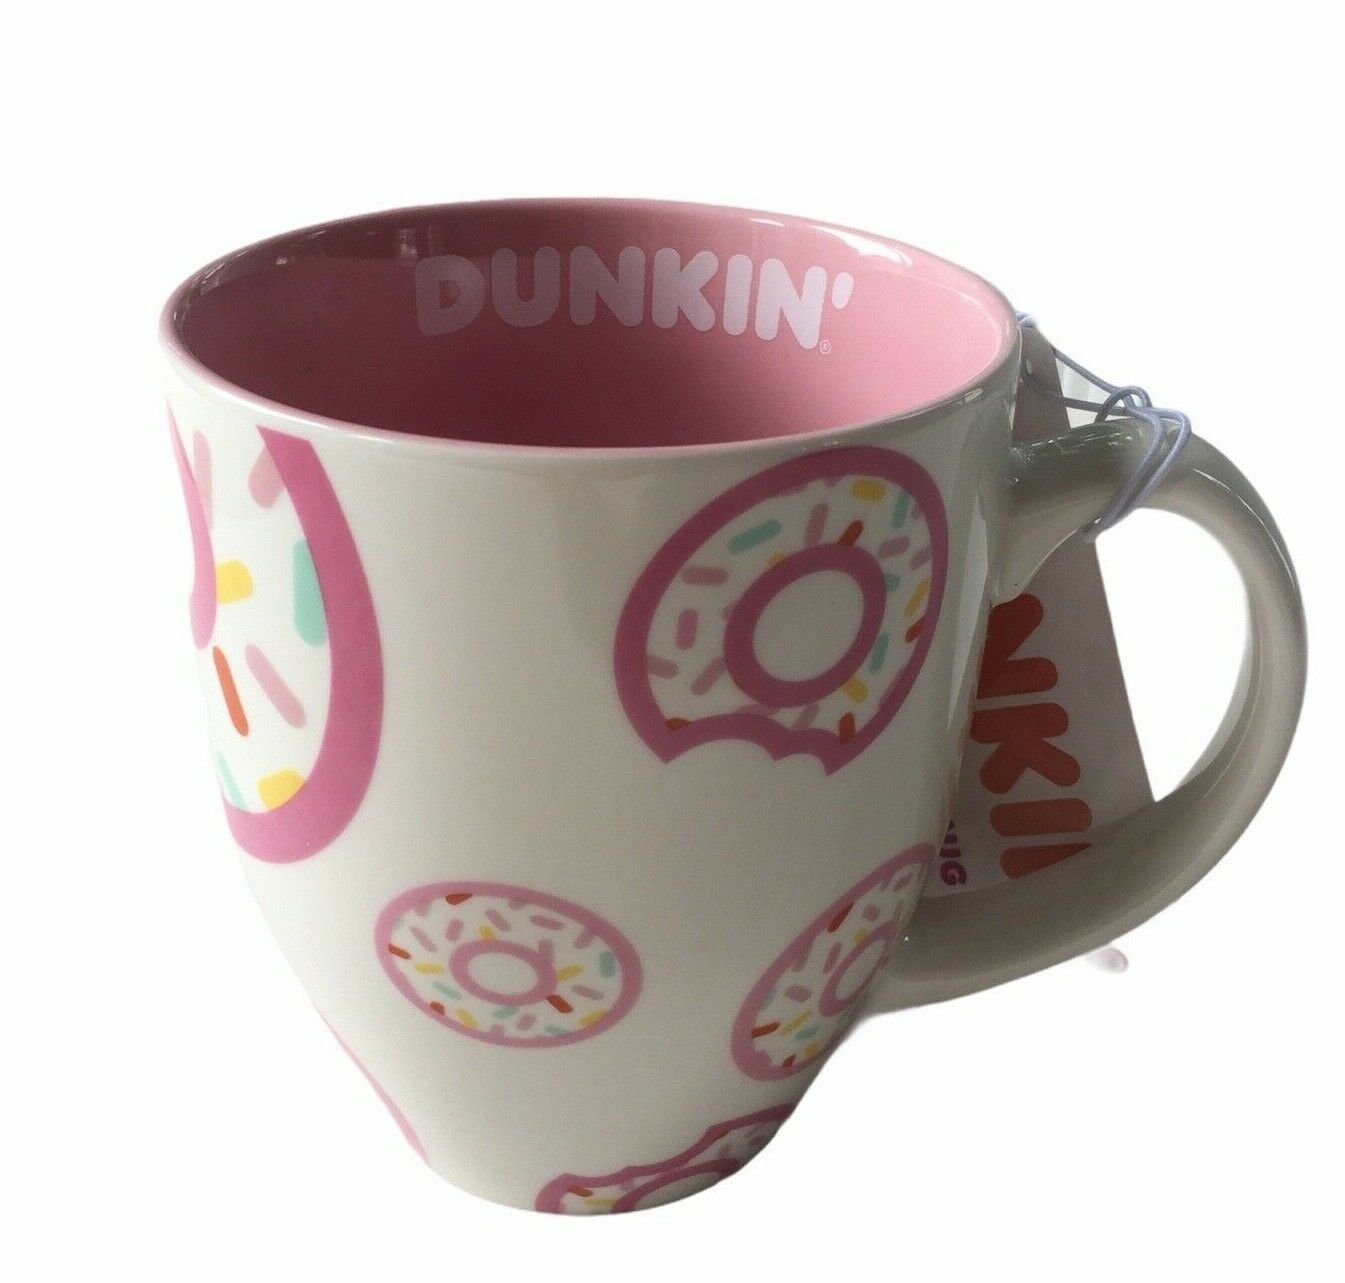 Dunkin Donuts Mug 1 customer review and 50 listings